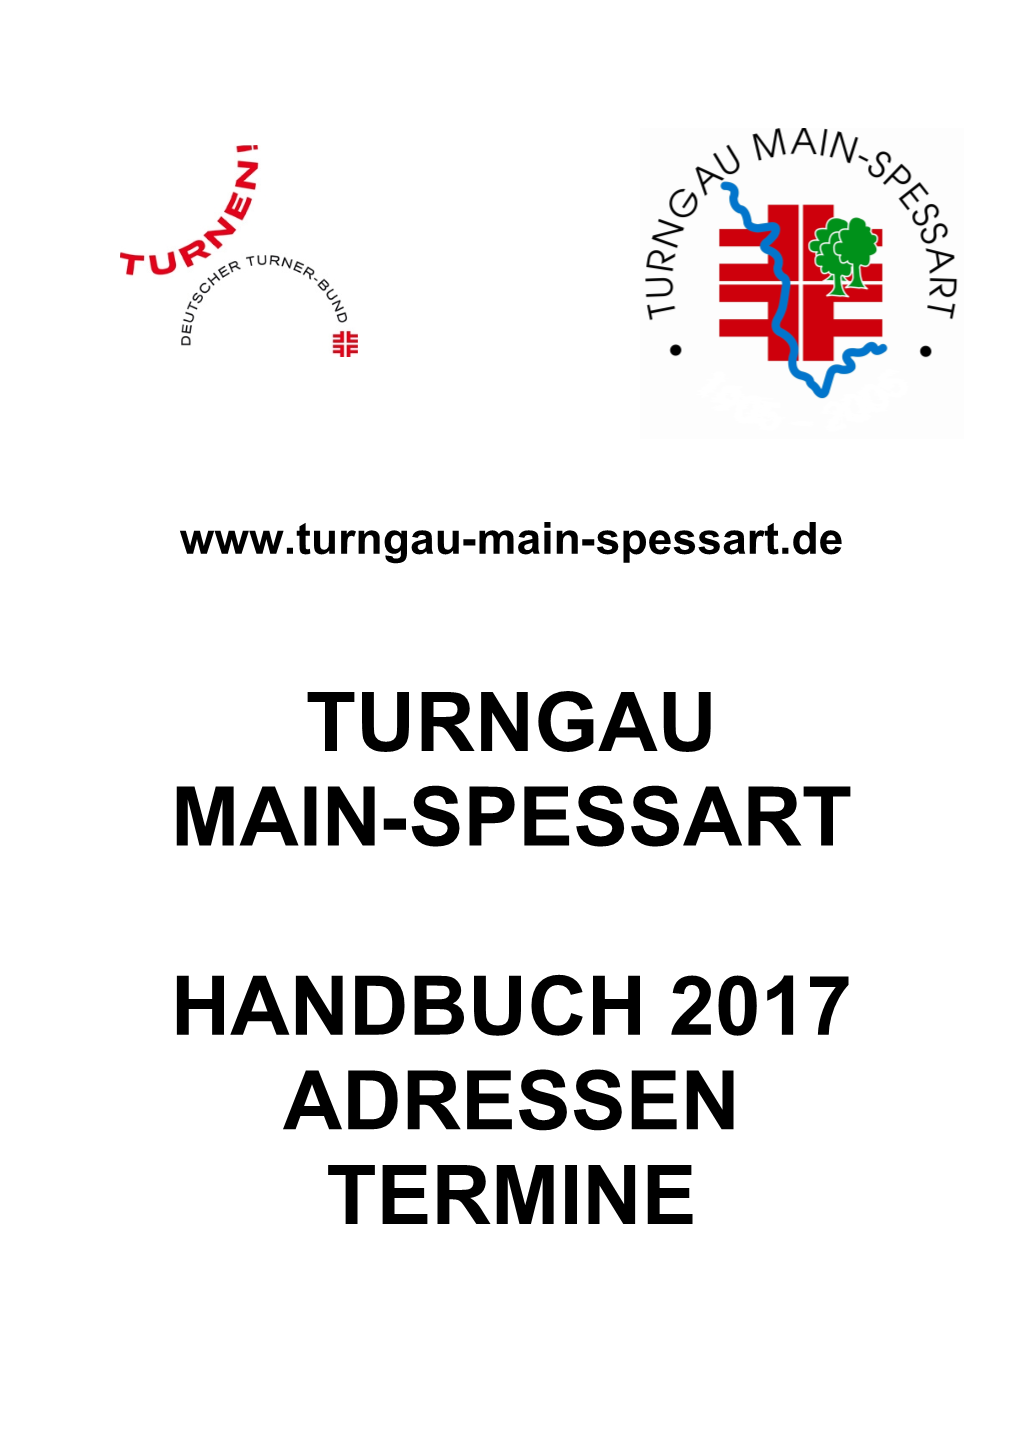 Turngau Main-Spessart Handbuch 2017 Adressen